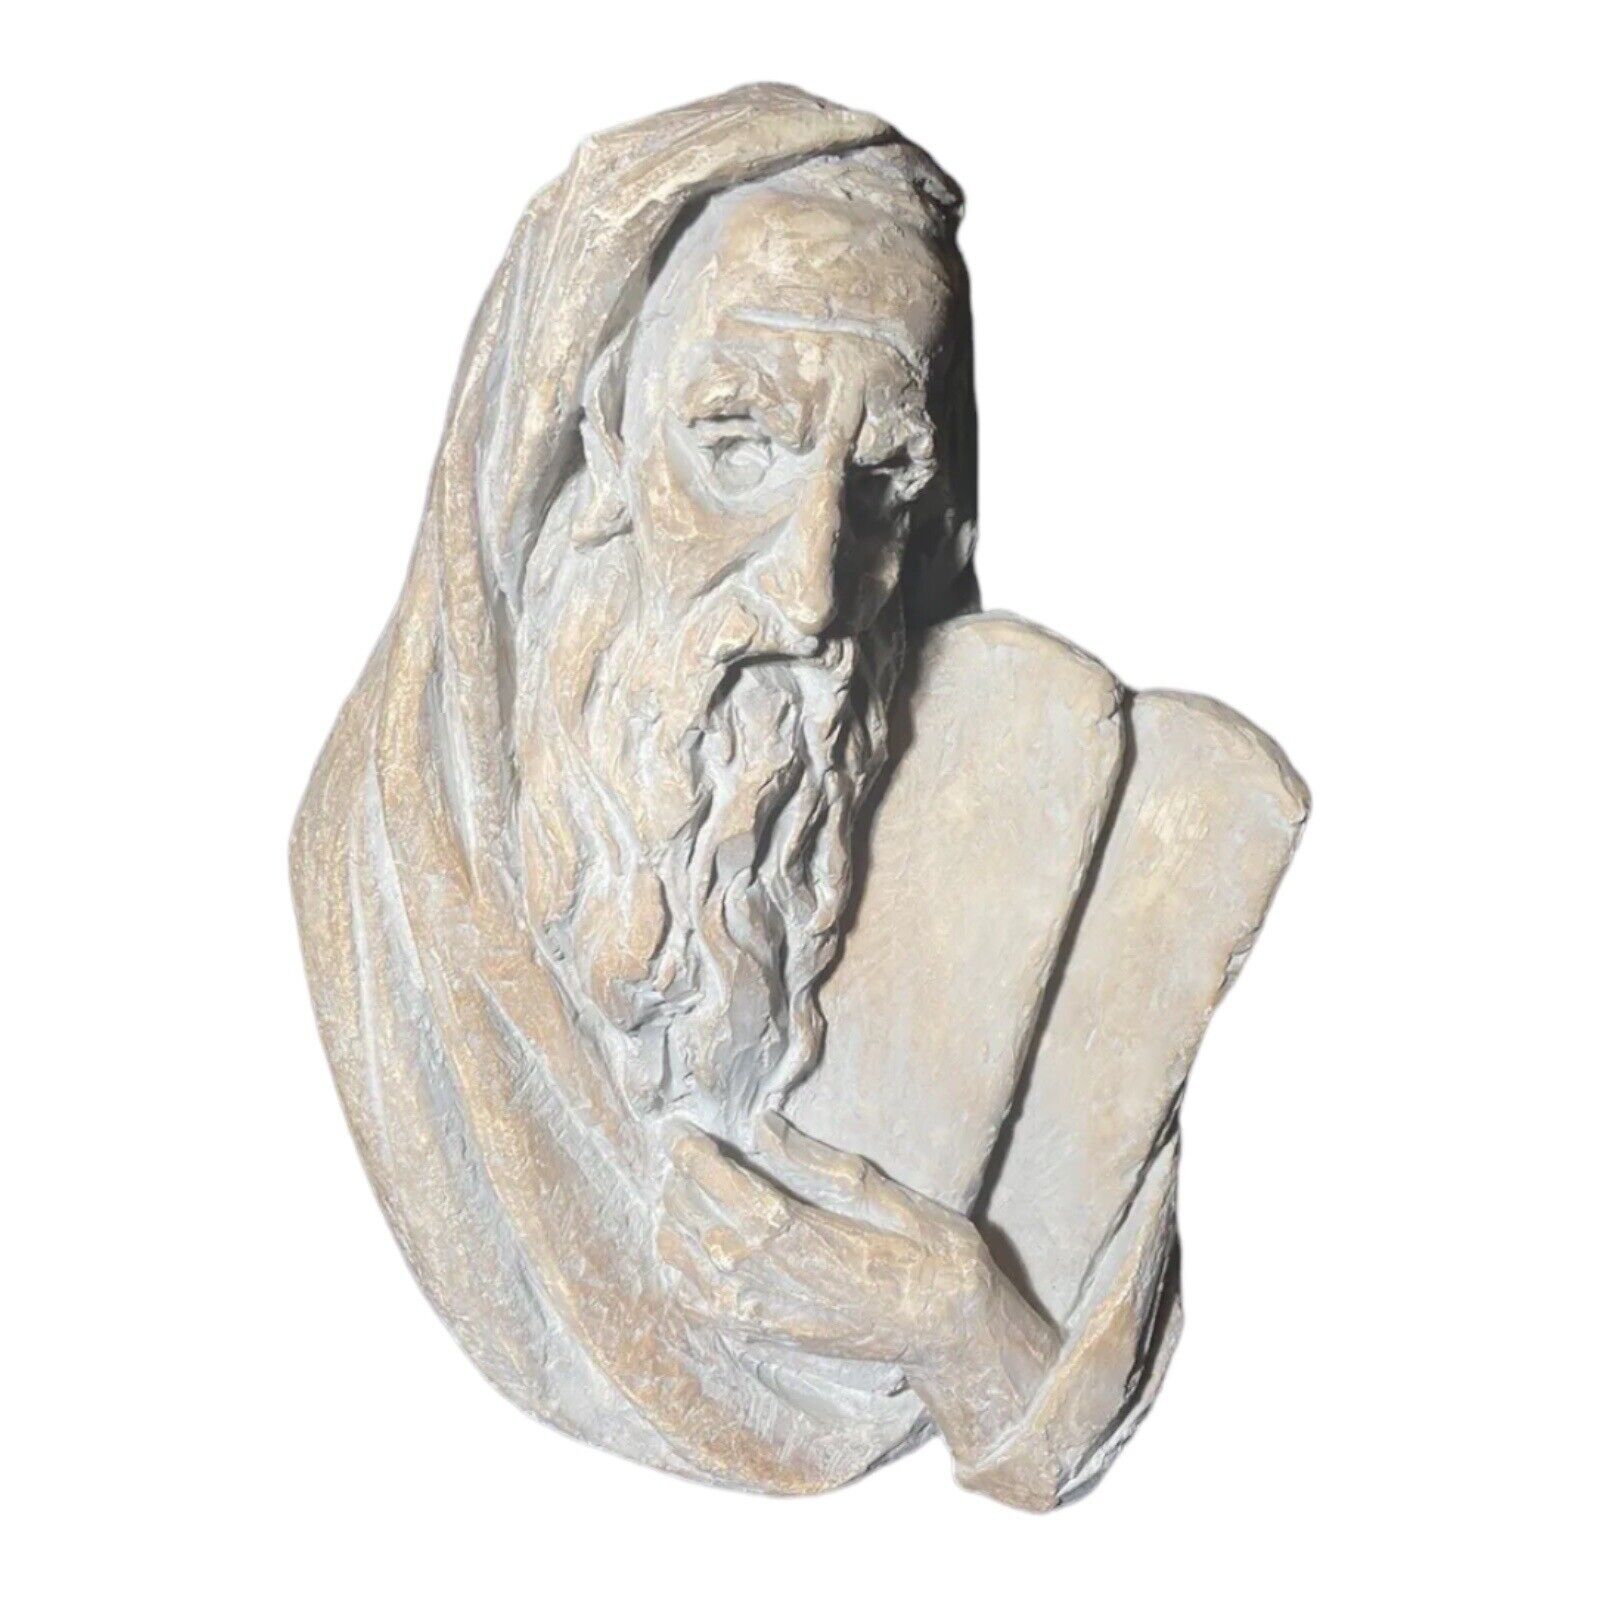 Vintage Moses Sculpture by Bergier 1967 - Jewish Sculpture Religious